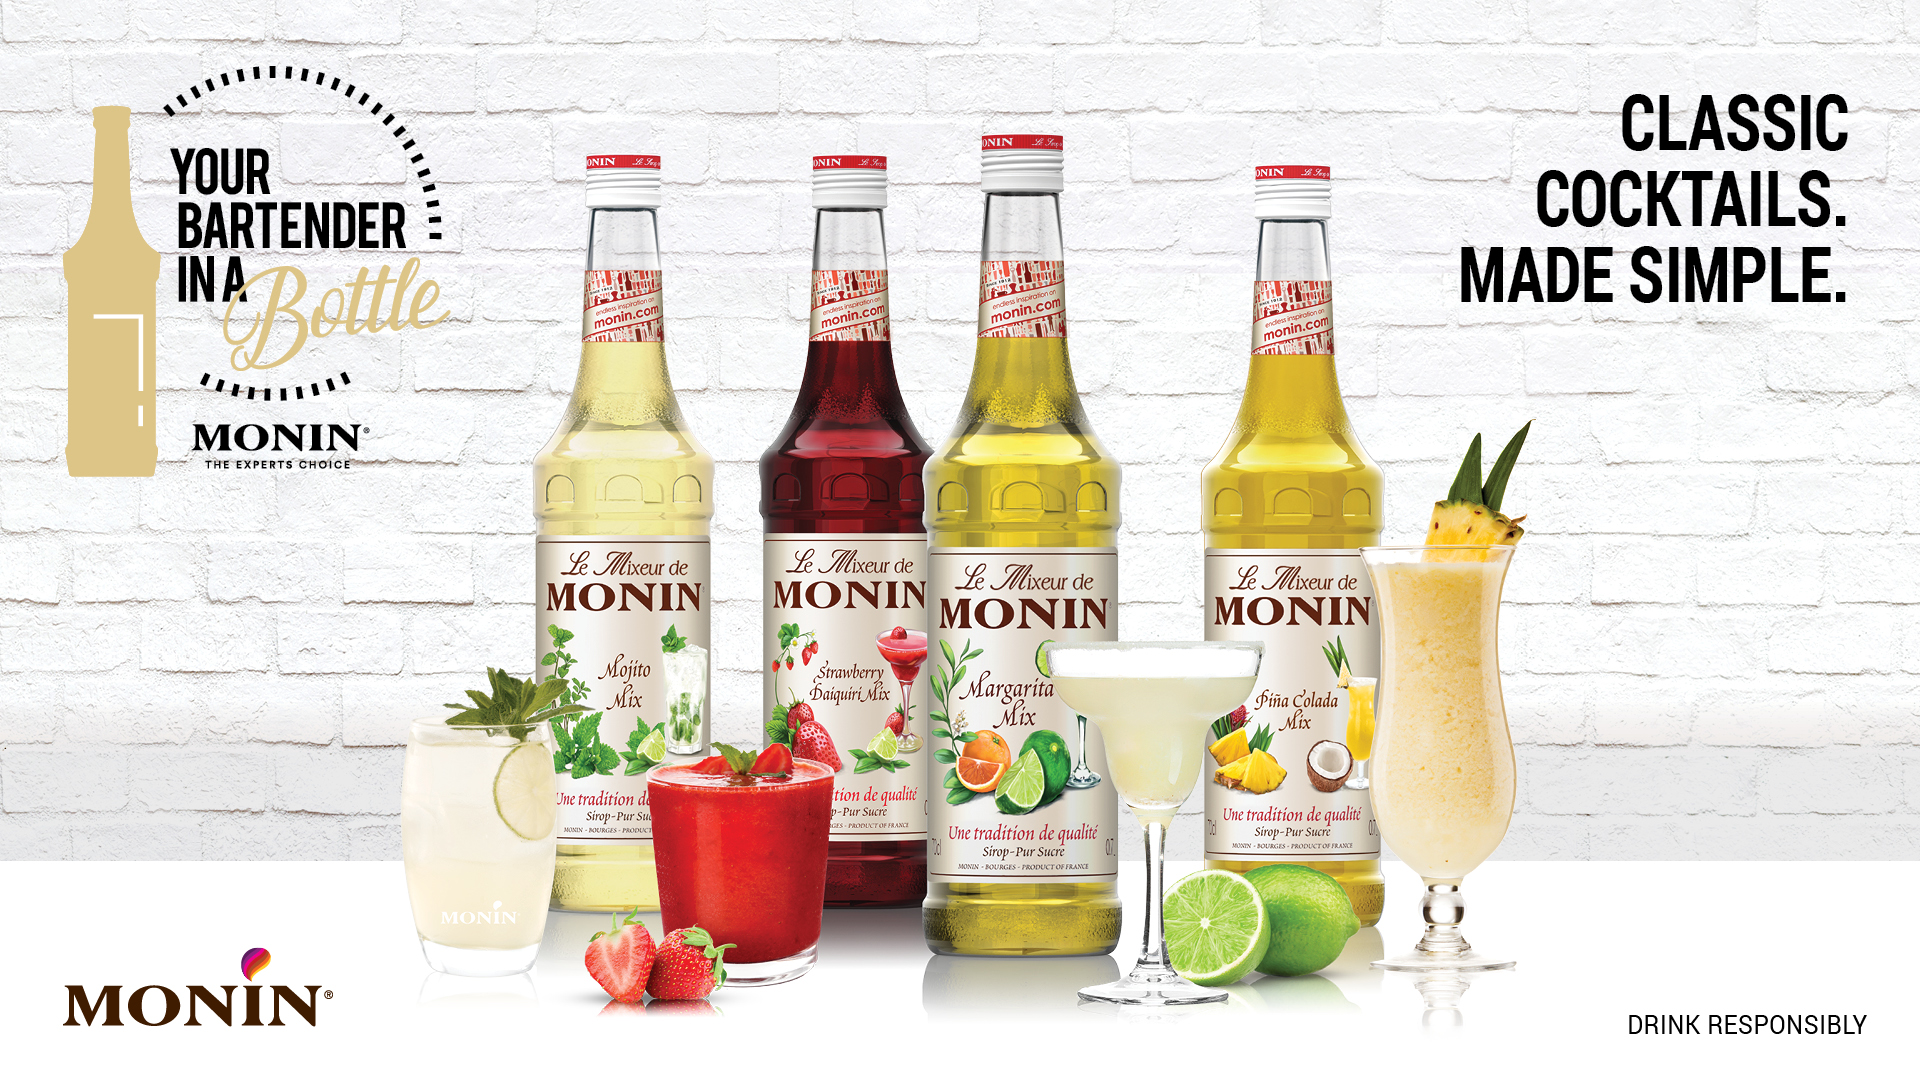 MONIN. The expert choice since 1912. Your bartender in a bottle.